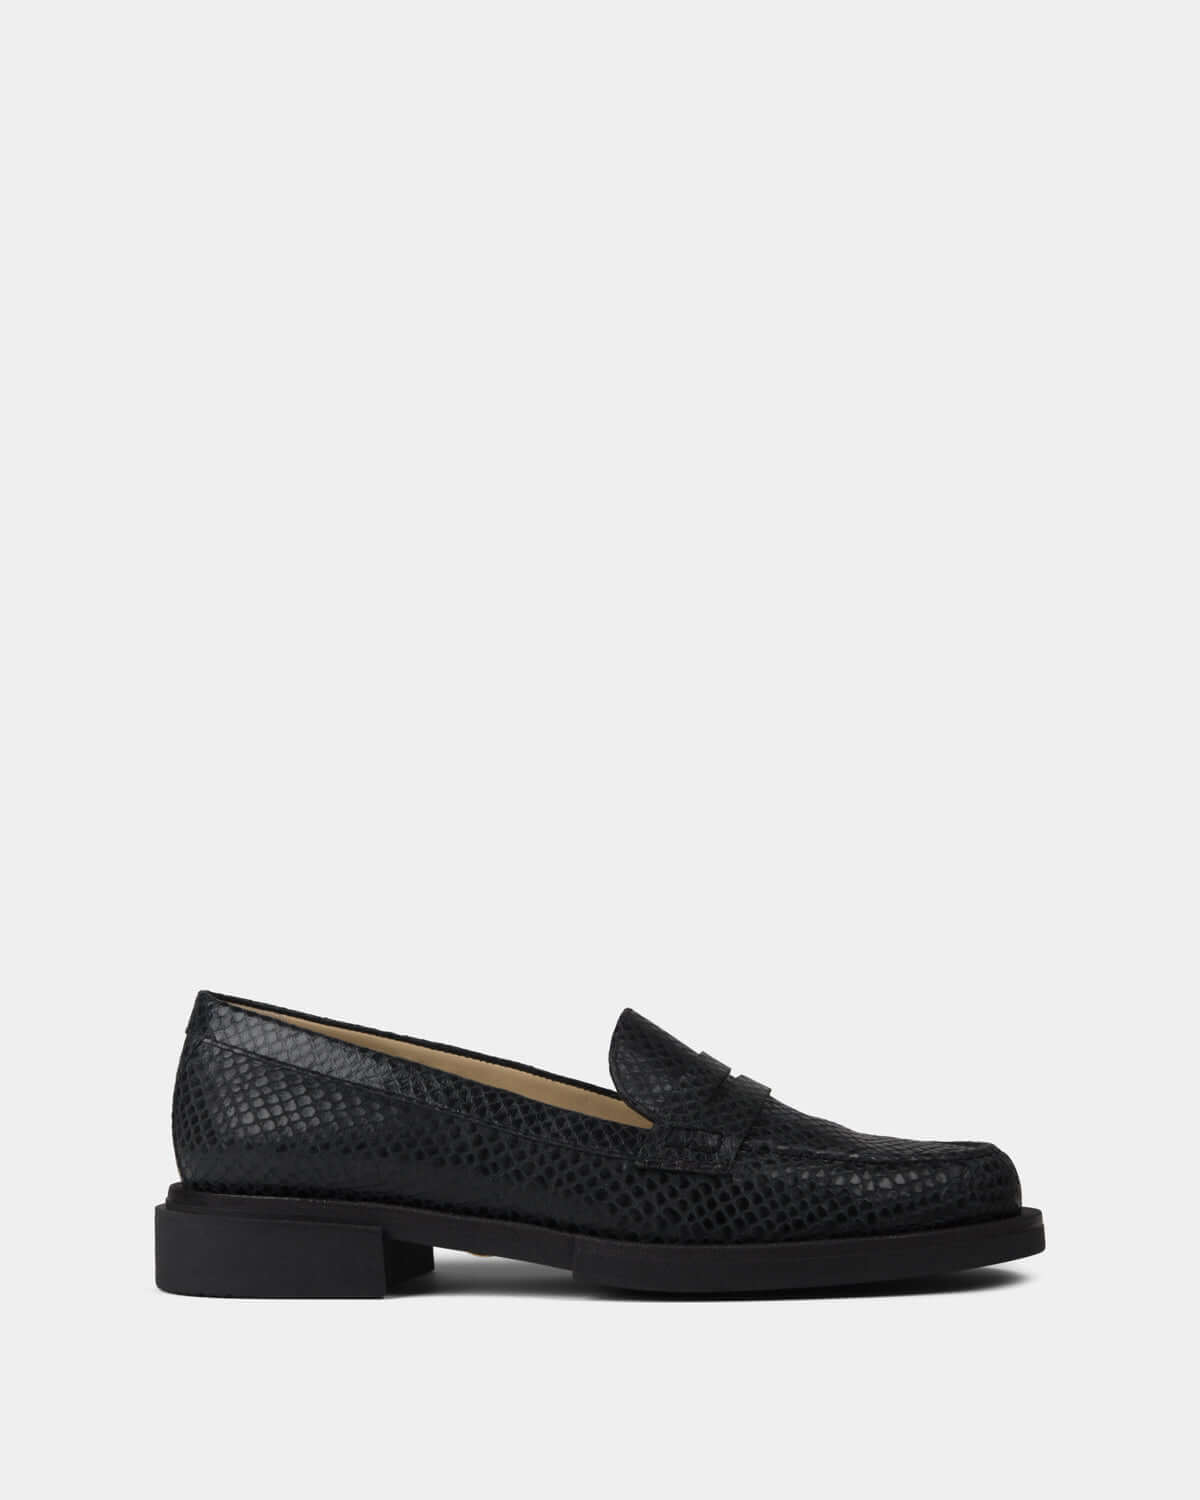 kallu-kallú-black-snake-leather-loafers-for-women-made-in-spain-loafers-moccasins